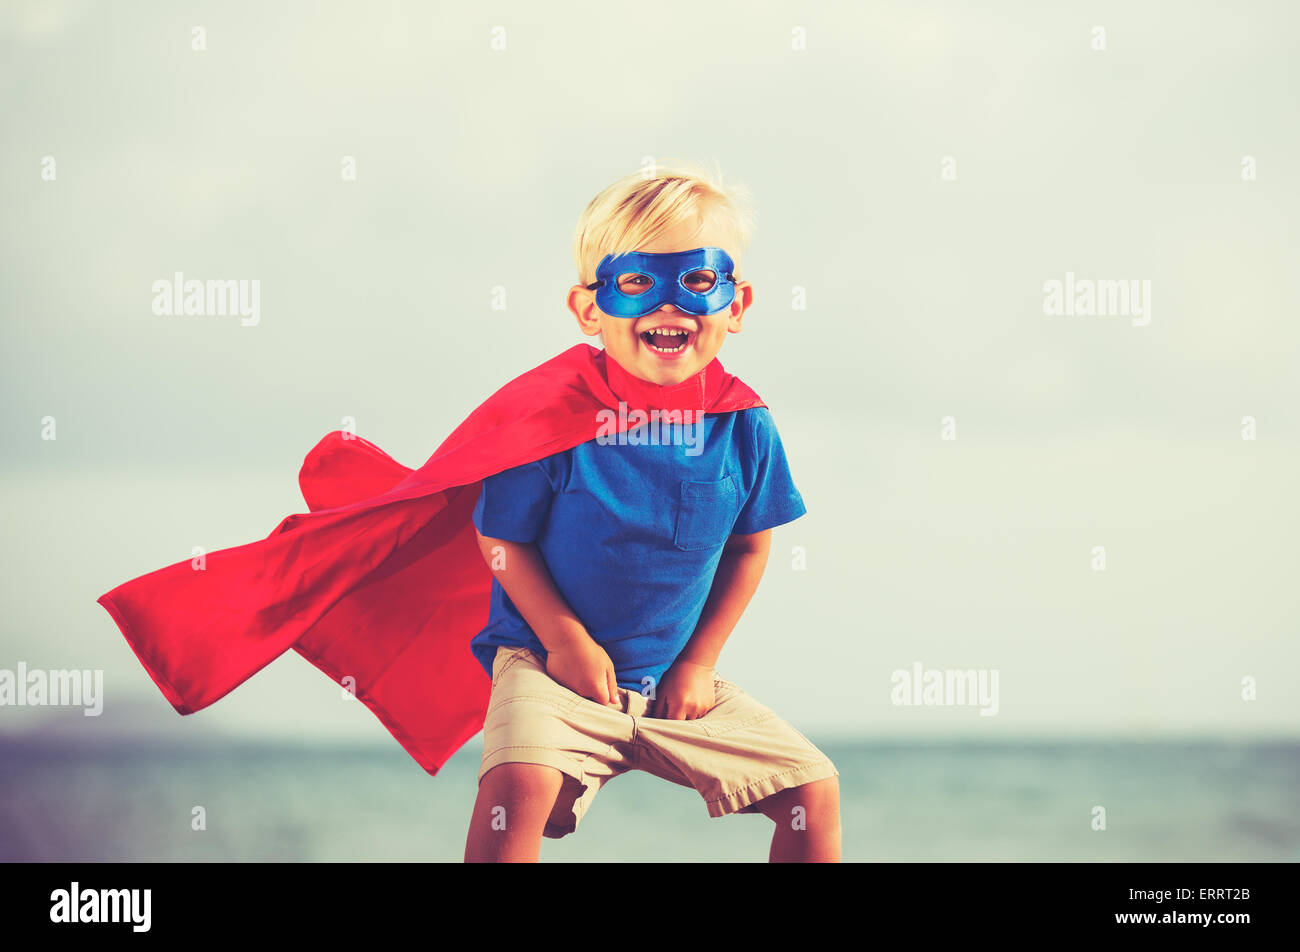 Superhero Kid, Young Happy Boy Playing Stock Photo